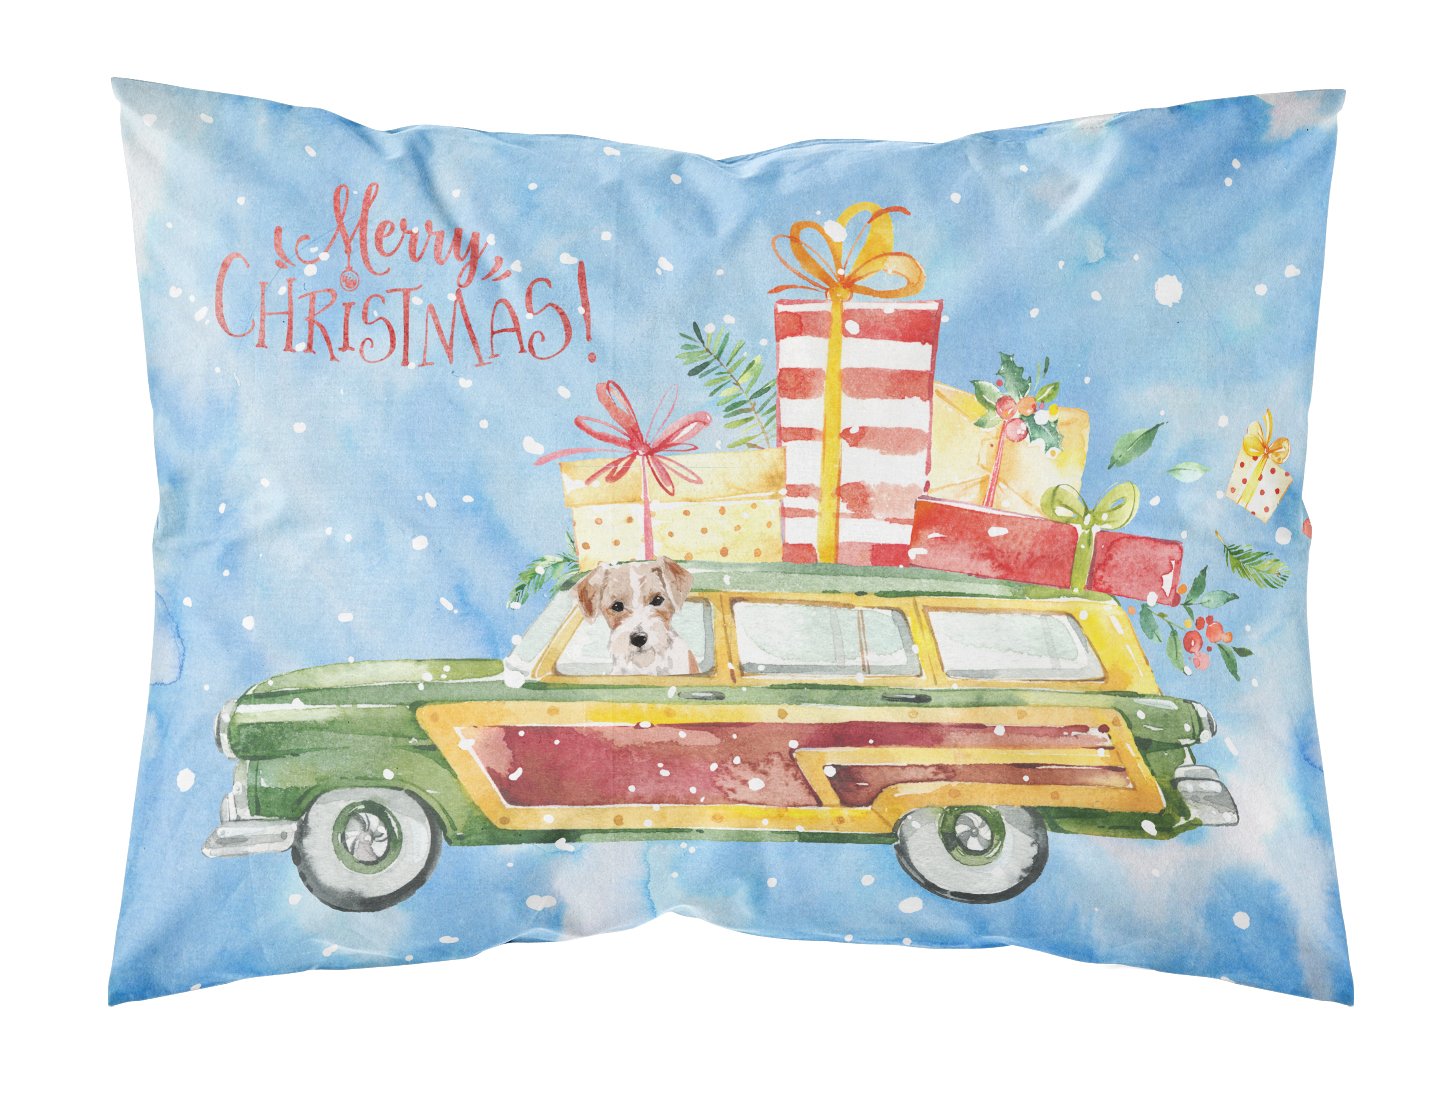 Merry Christmas Jack Russell Terrier Fabric Standard Pillowcase CK2467PILLOWCASE by Caroline's Treasures